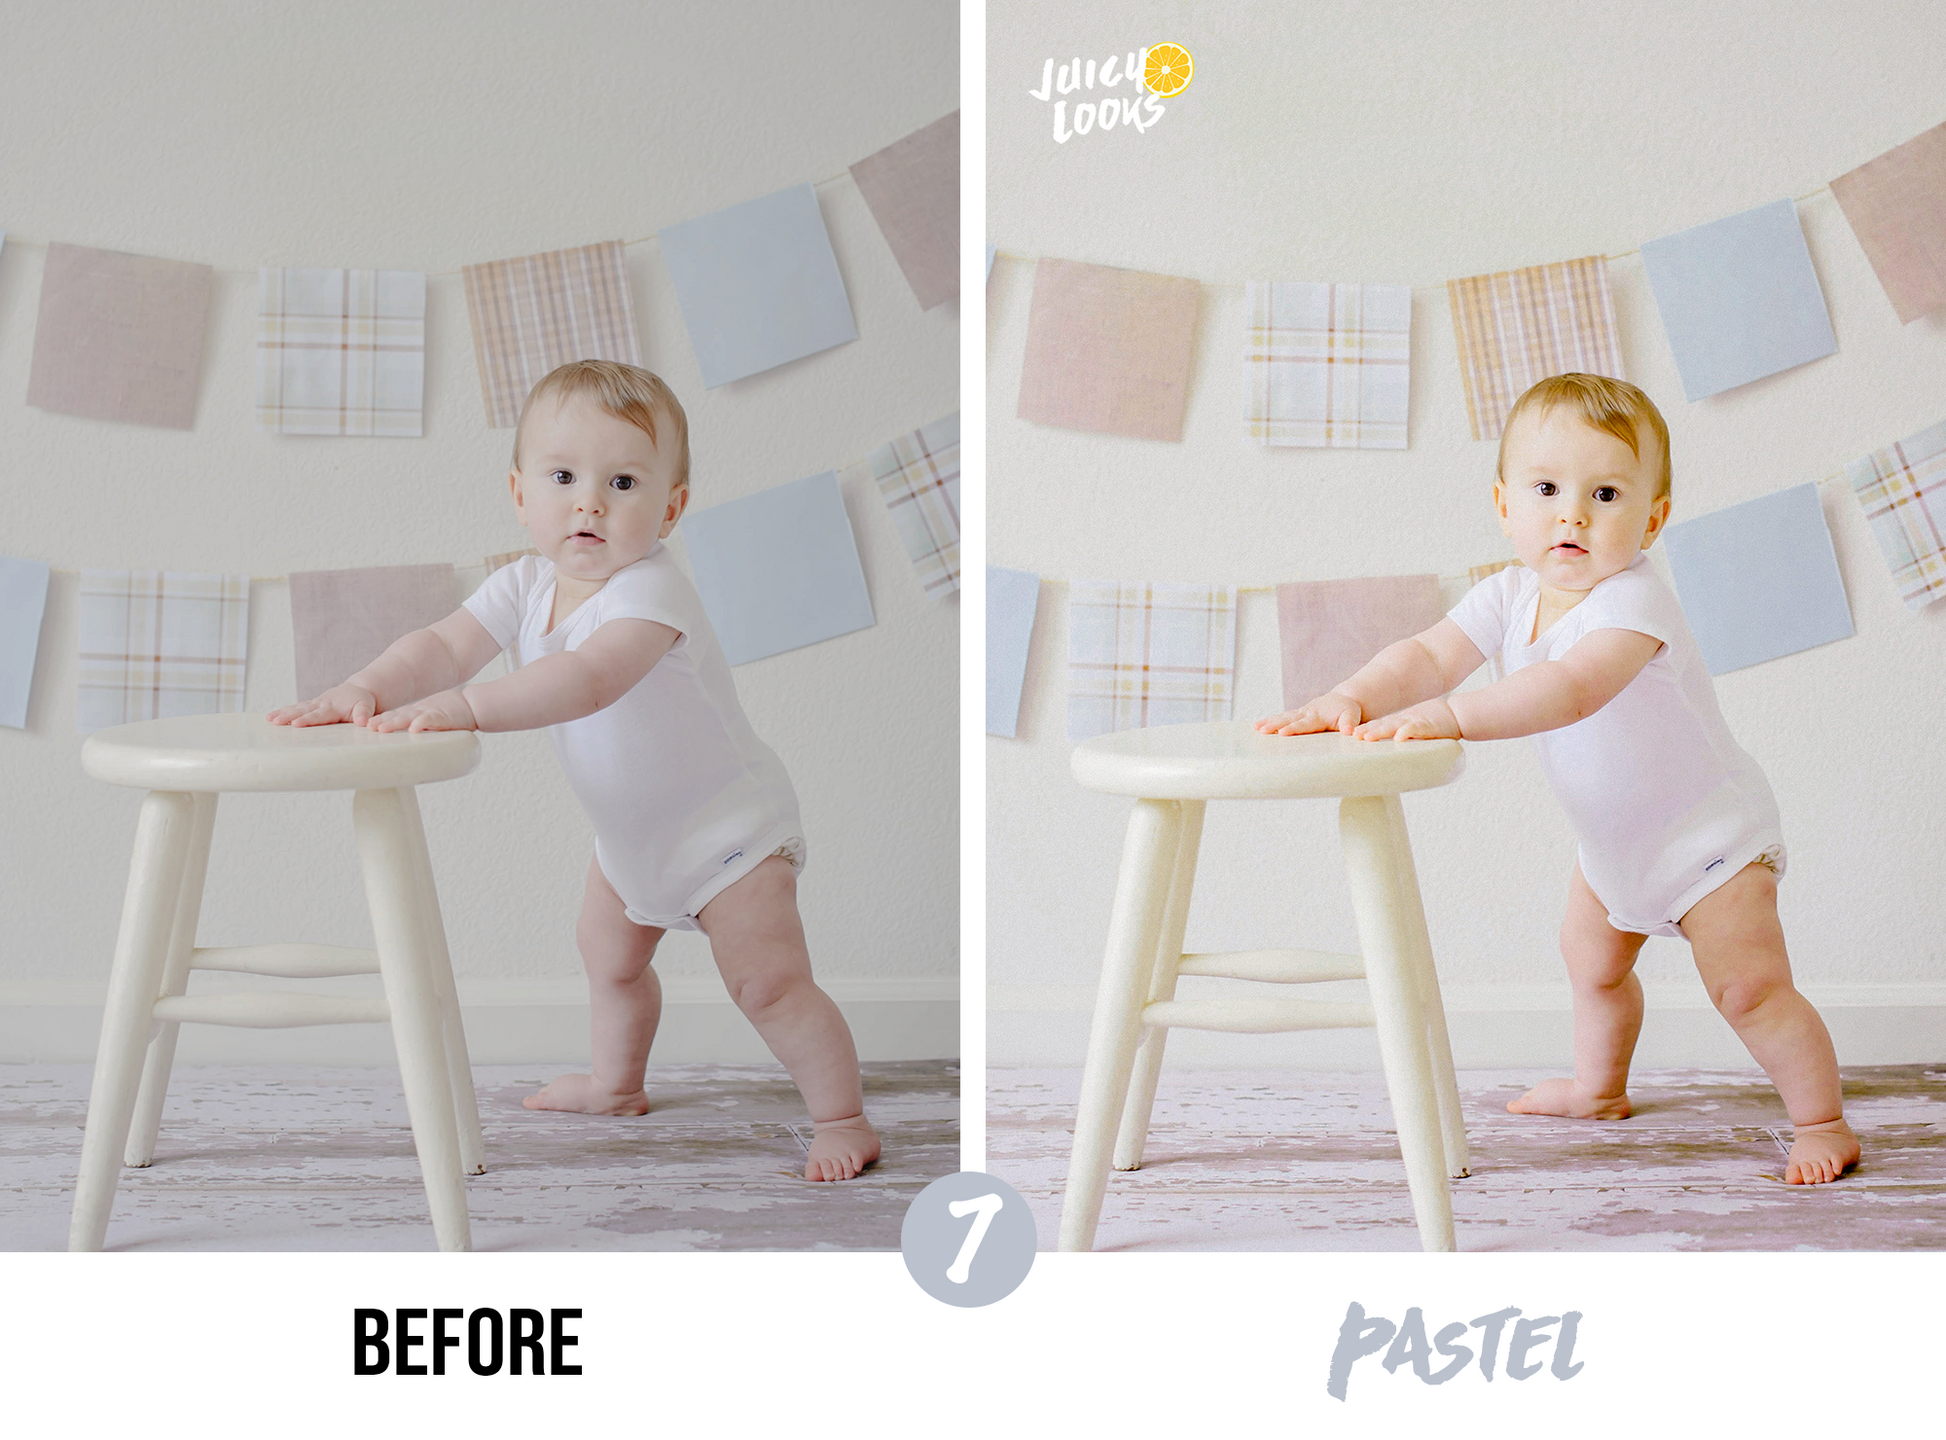 Baby Lightroom Presets for Mobile & Desktop - Juicy Looks Presets